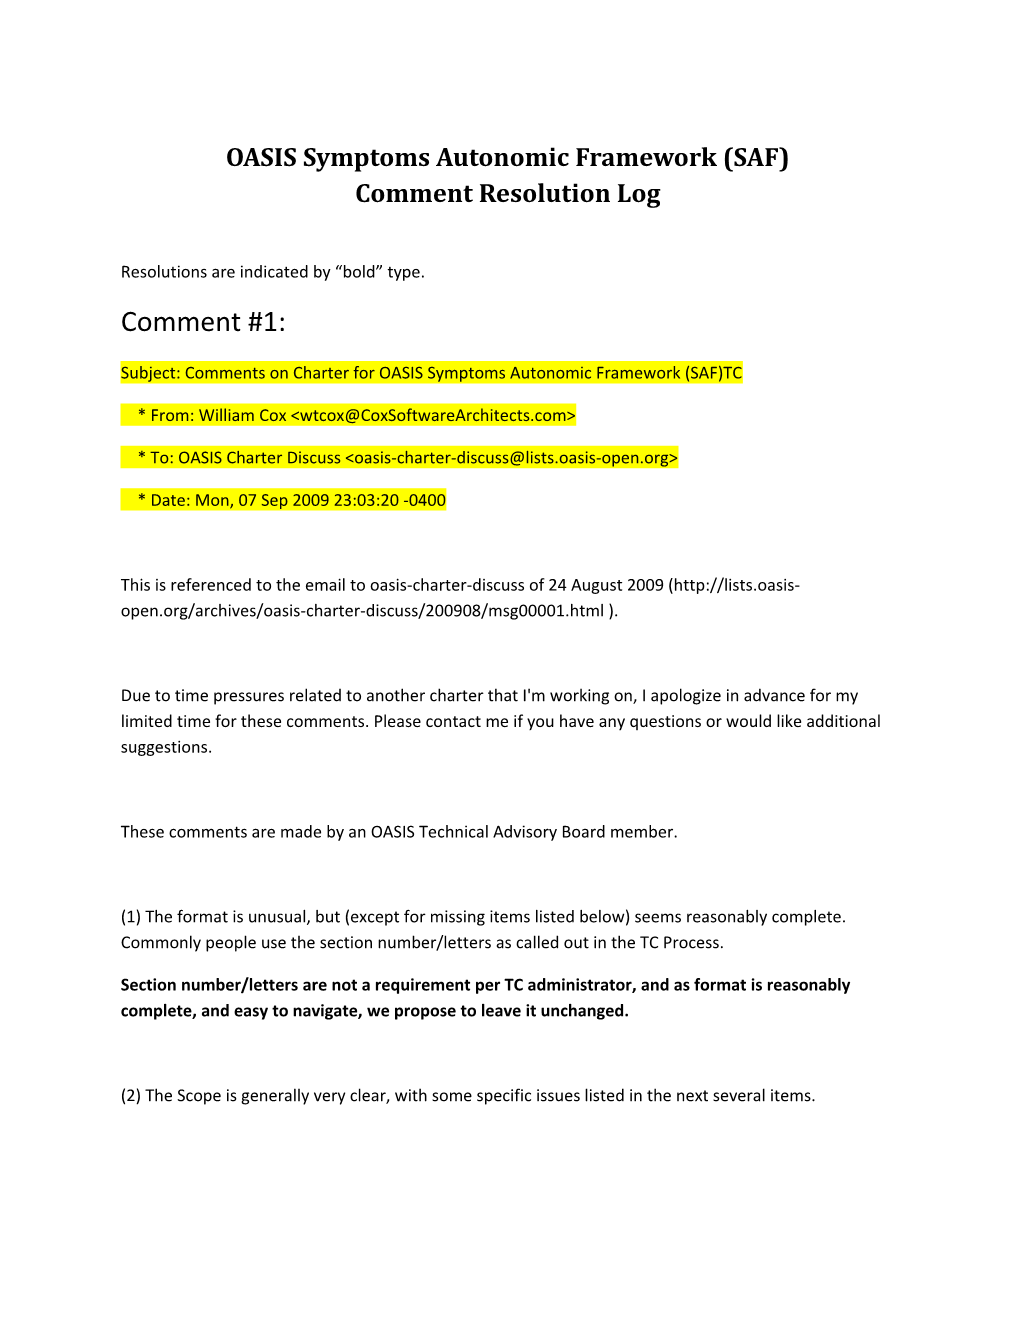 OASIS Symptoms Autonomic Framework (SAF) Comment Resolution Log